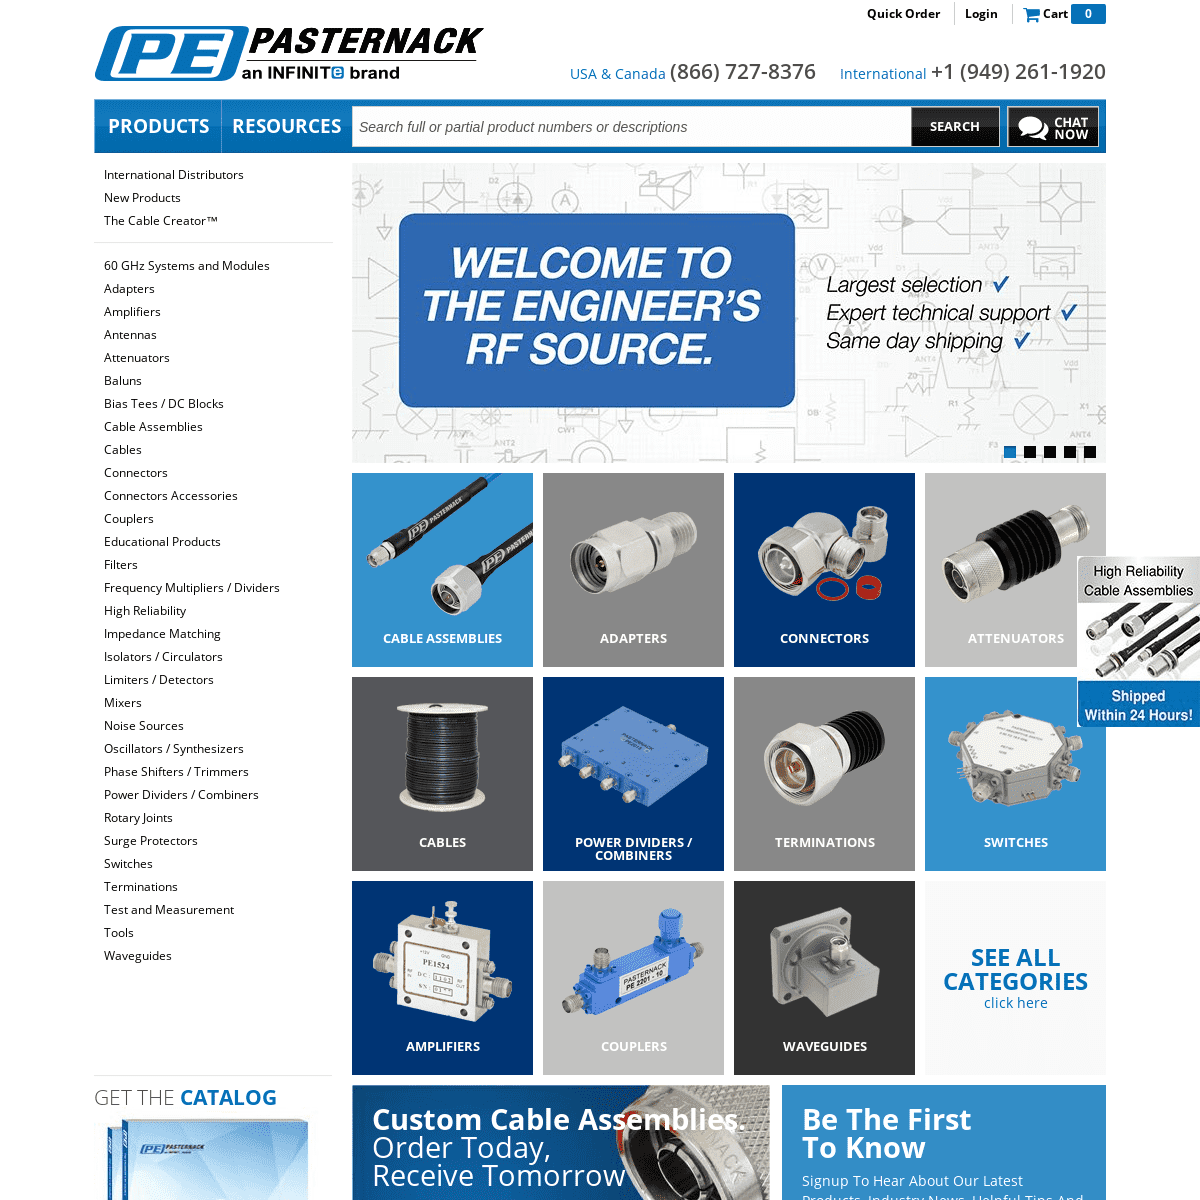 A complete backup of pasternack.com